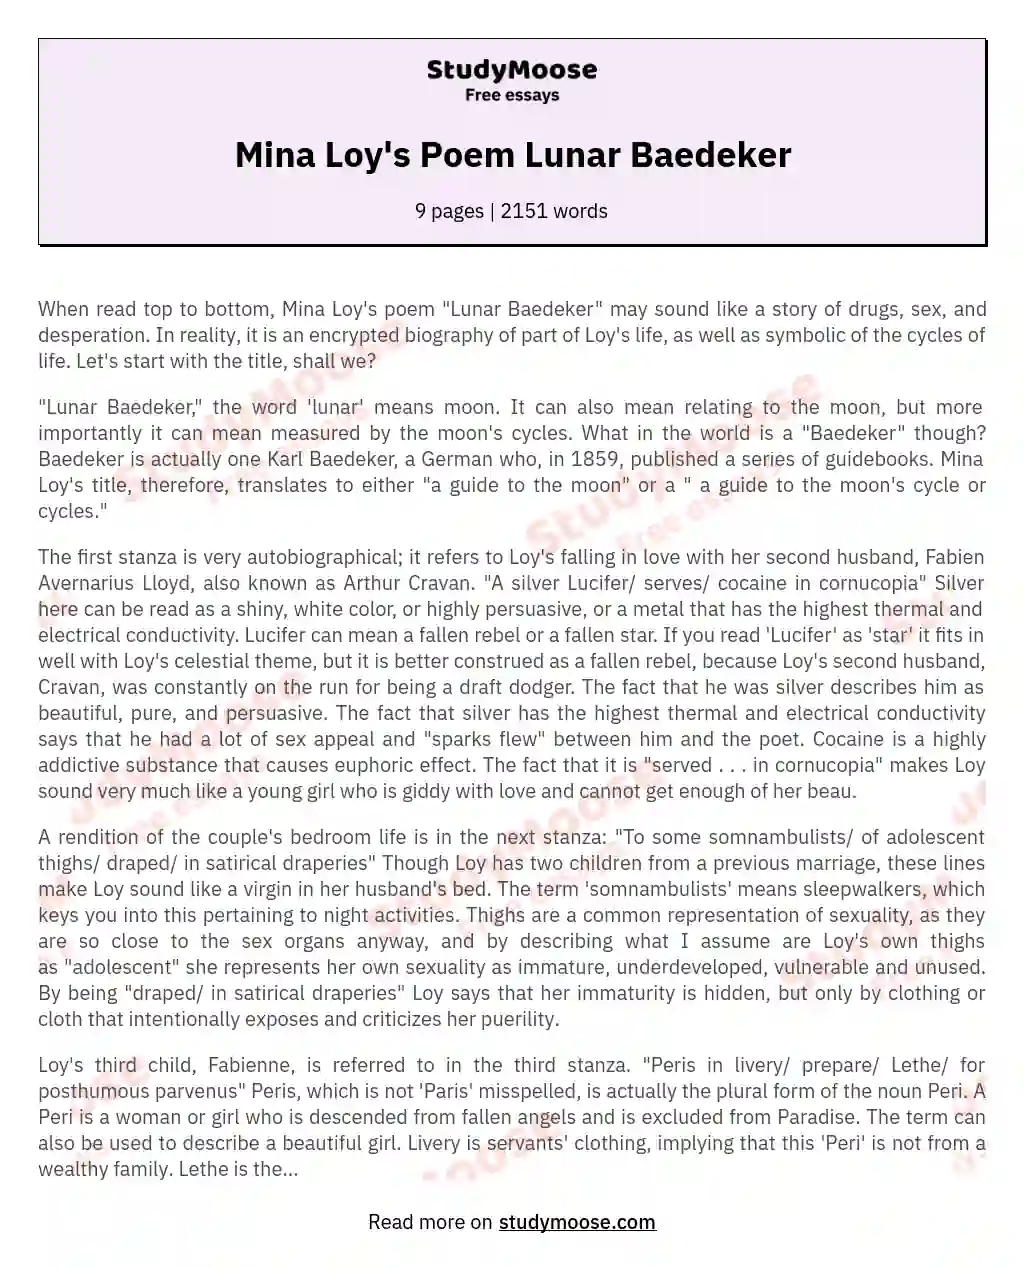 Decoding Mina Loy's "Lunar Baedeker" essay